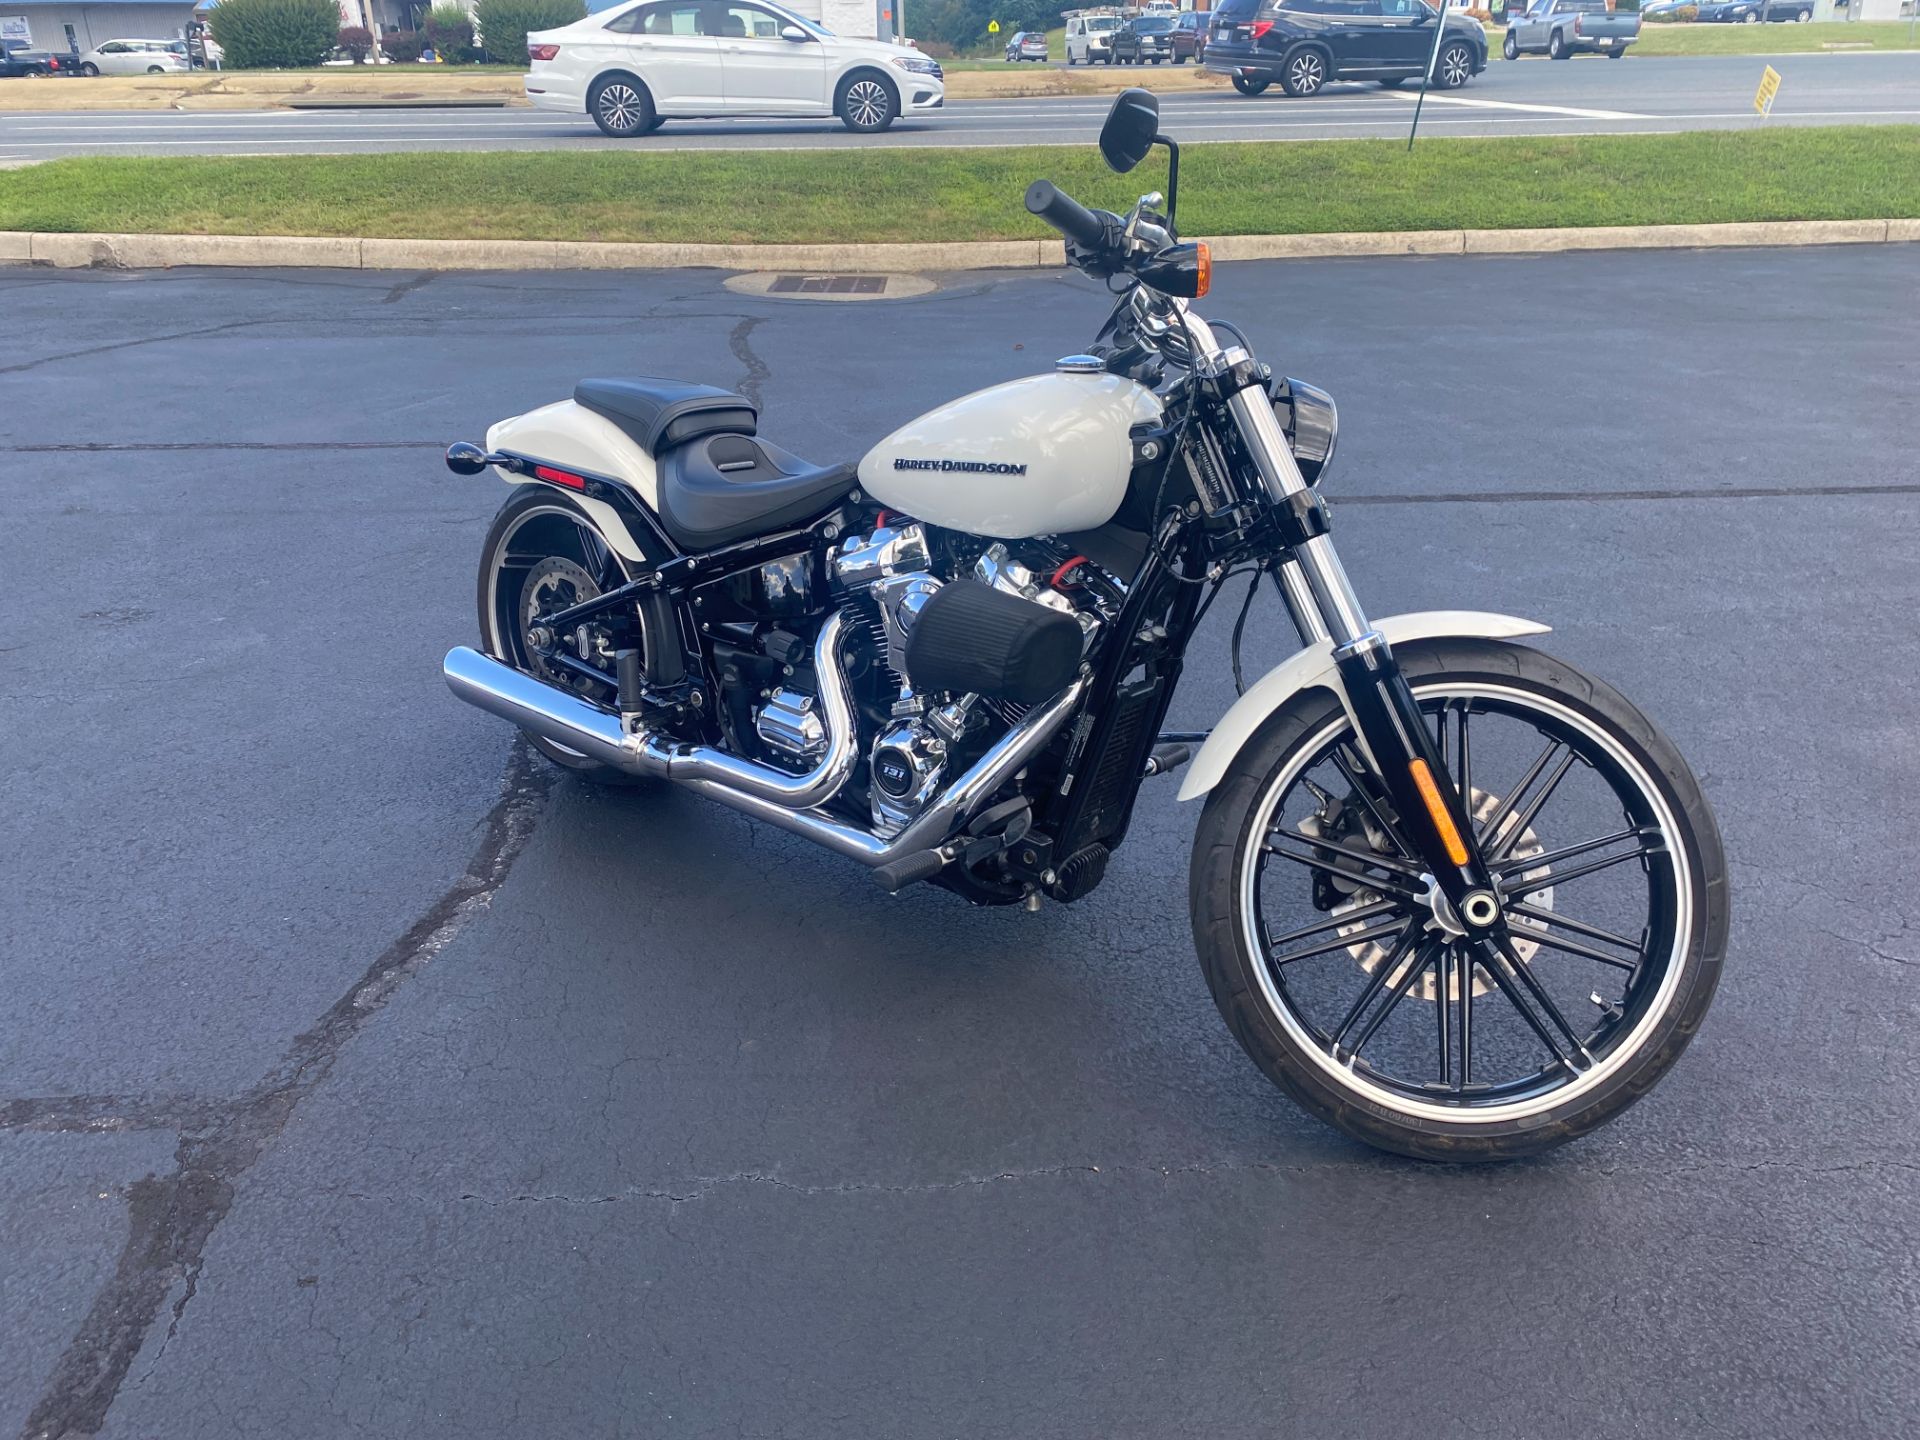 2019 Harley-Davidson Breakout® 114 in Lynchburg, Virginia - Photo 2